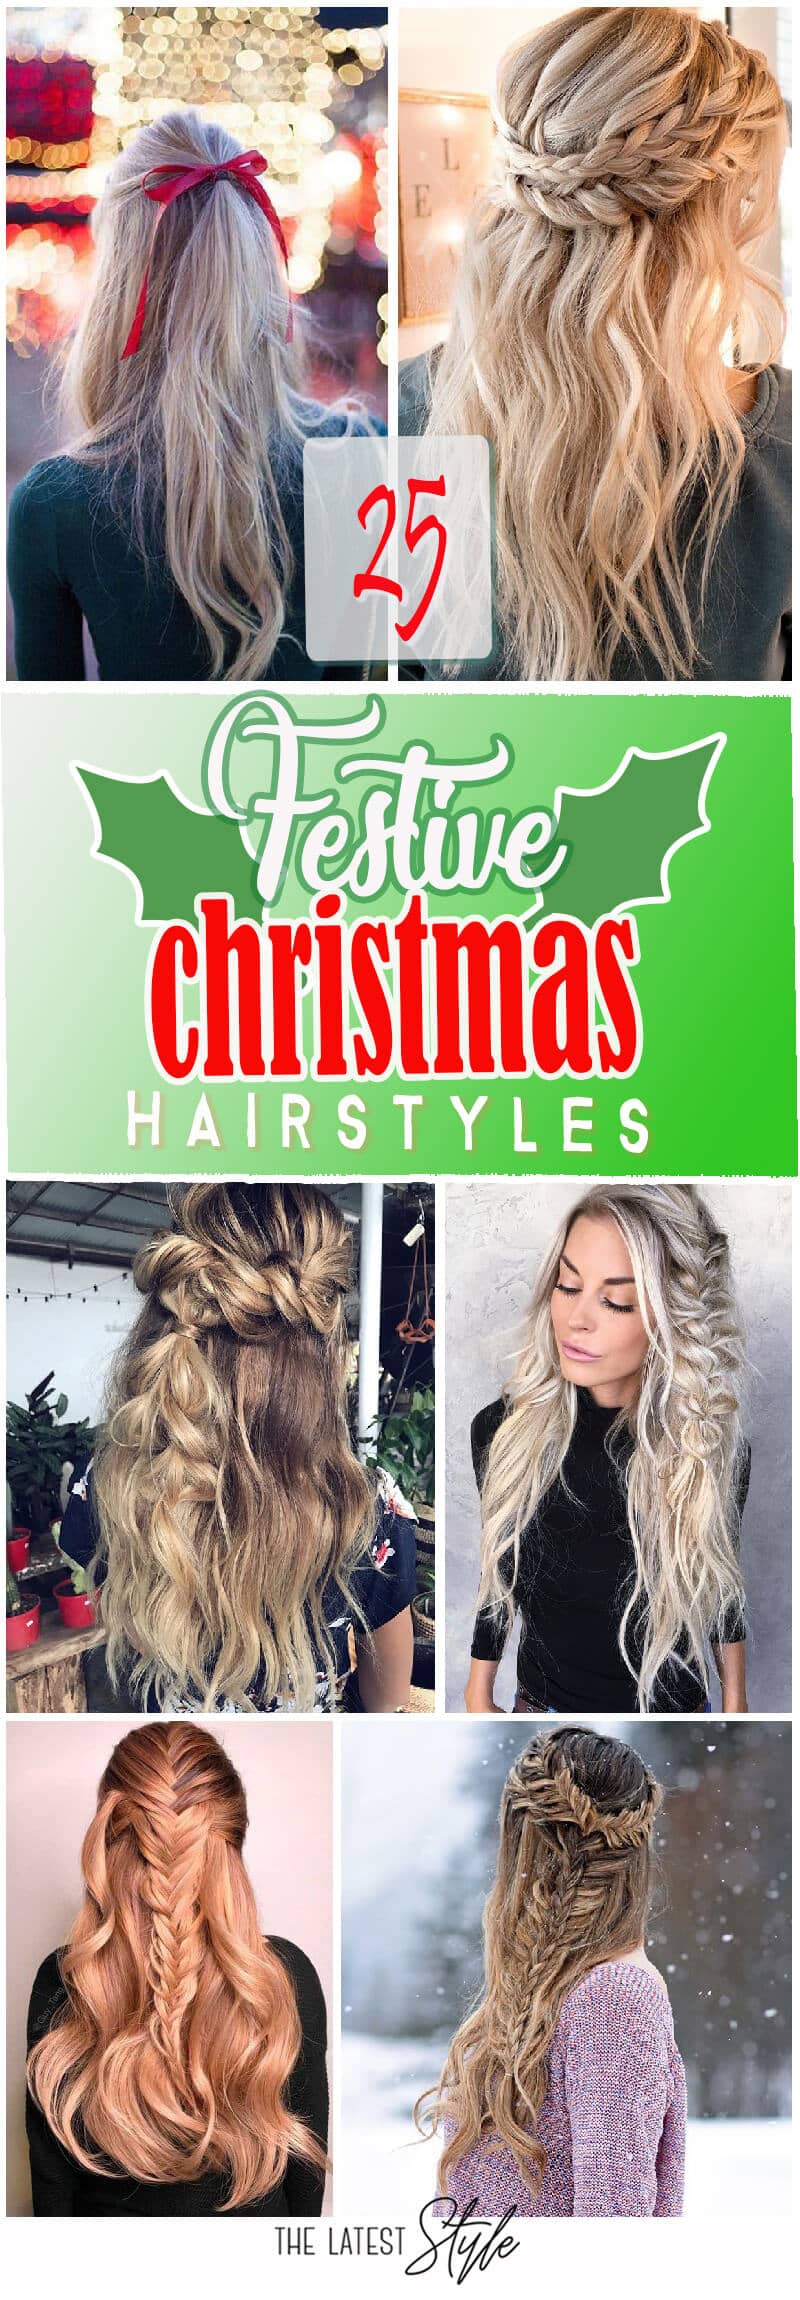 25 Festive & Fabulous Christmas Hairstyles